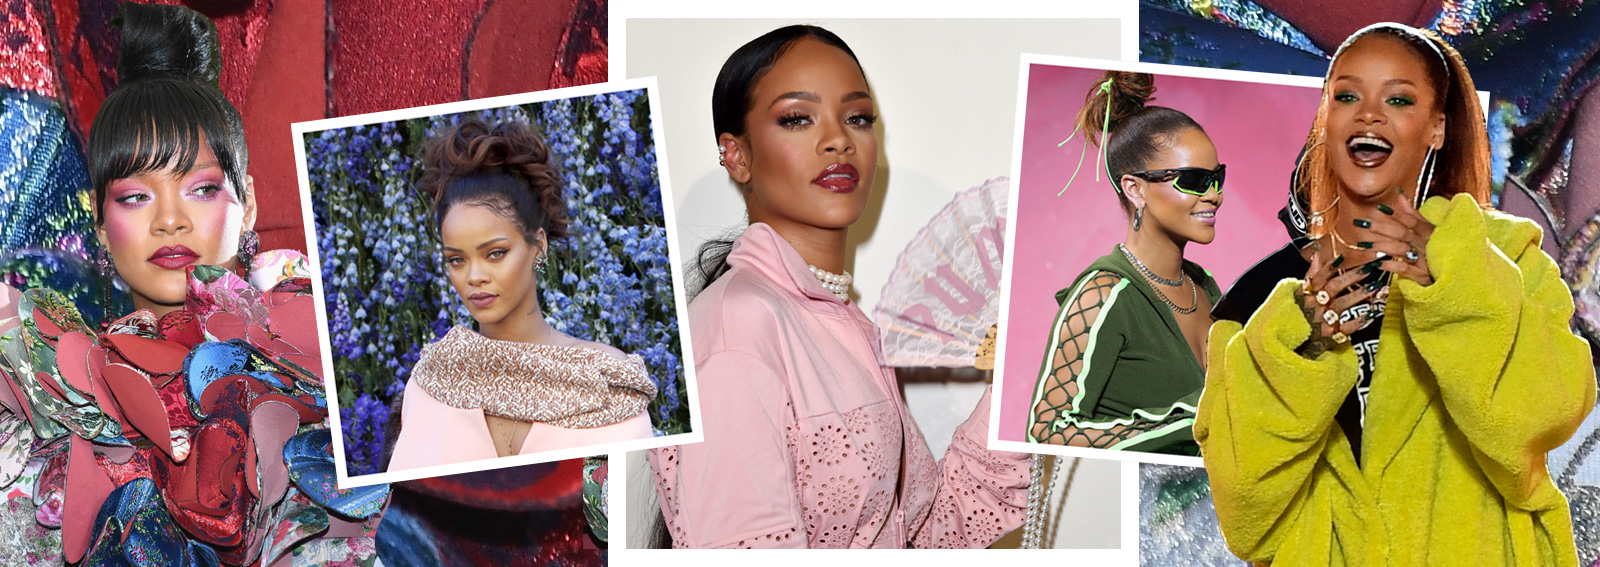 Rihanna beauty look: i trucchi e le acconciature più belle